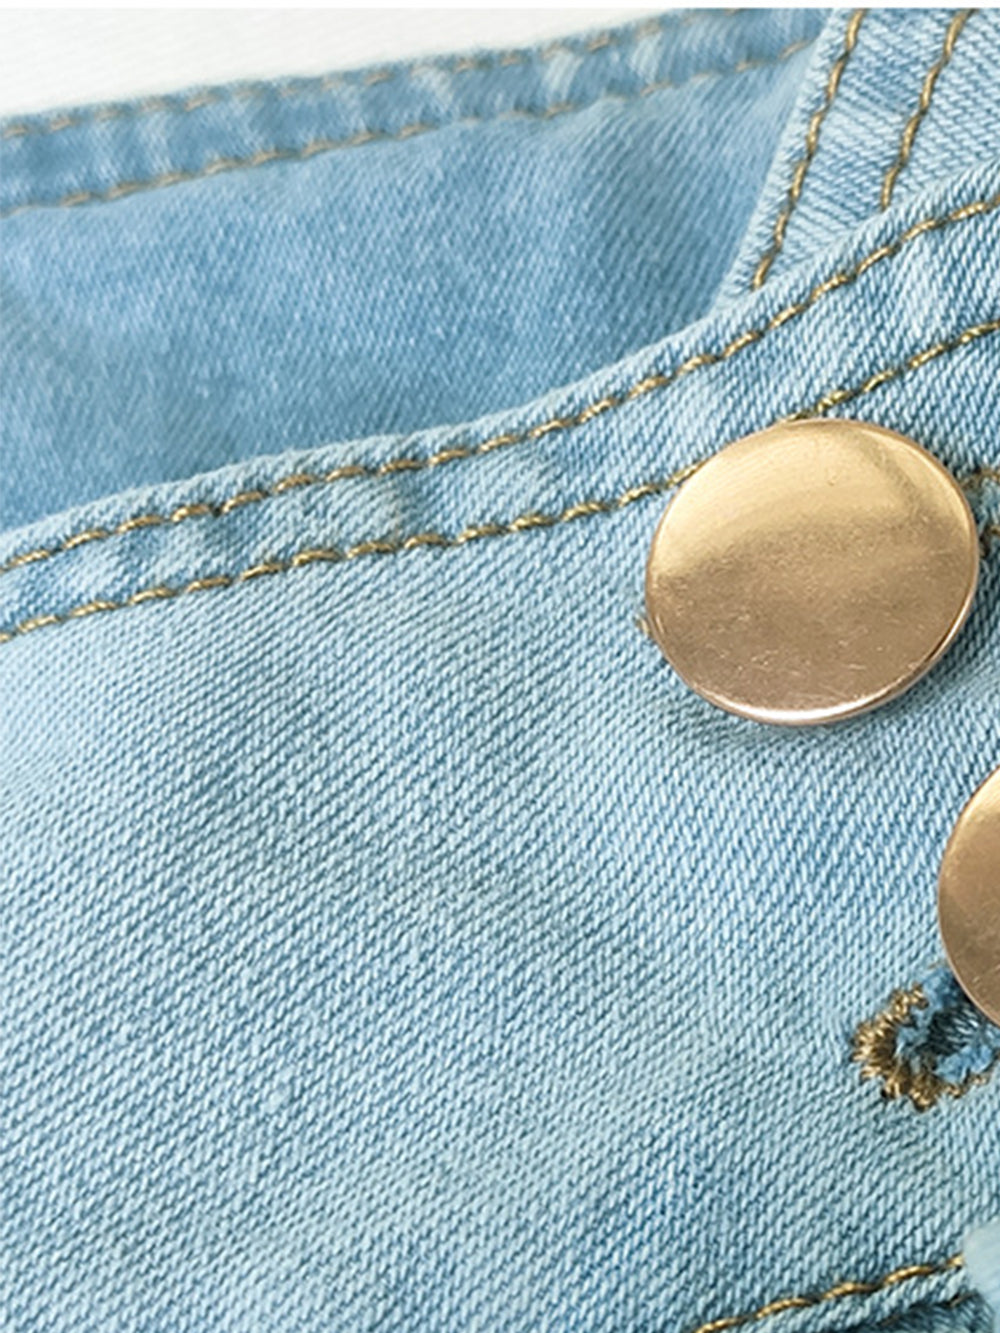 Camisa curta jeans com manga bufante solta